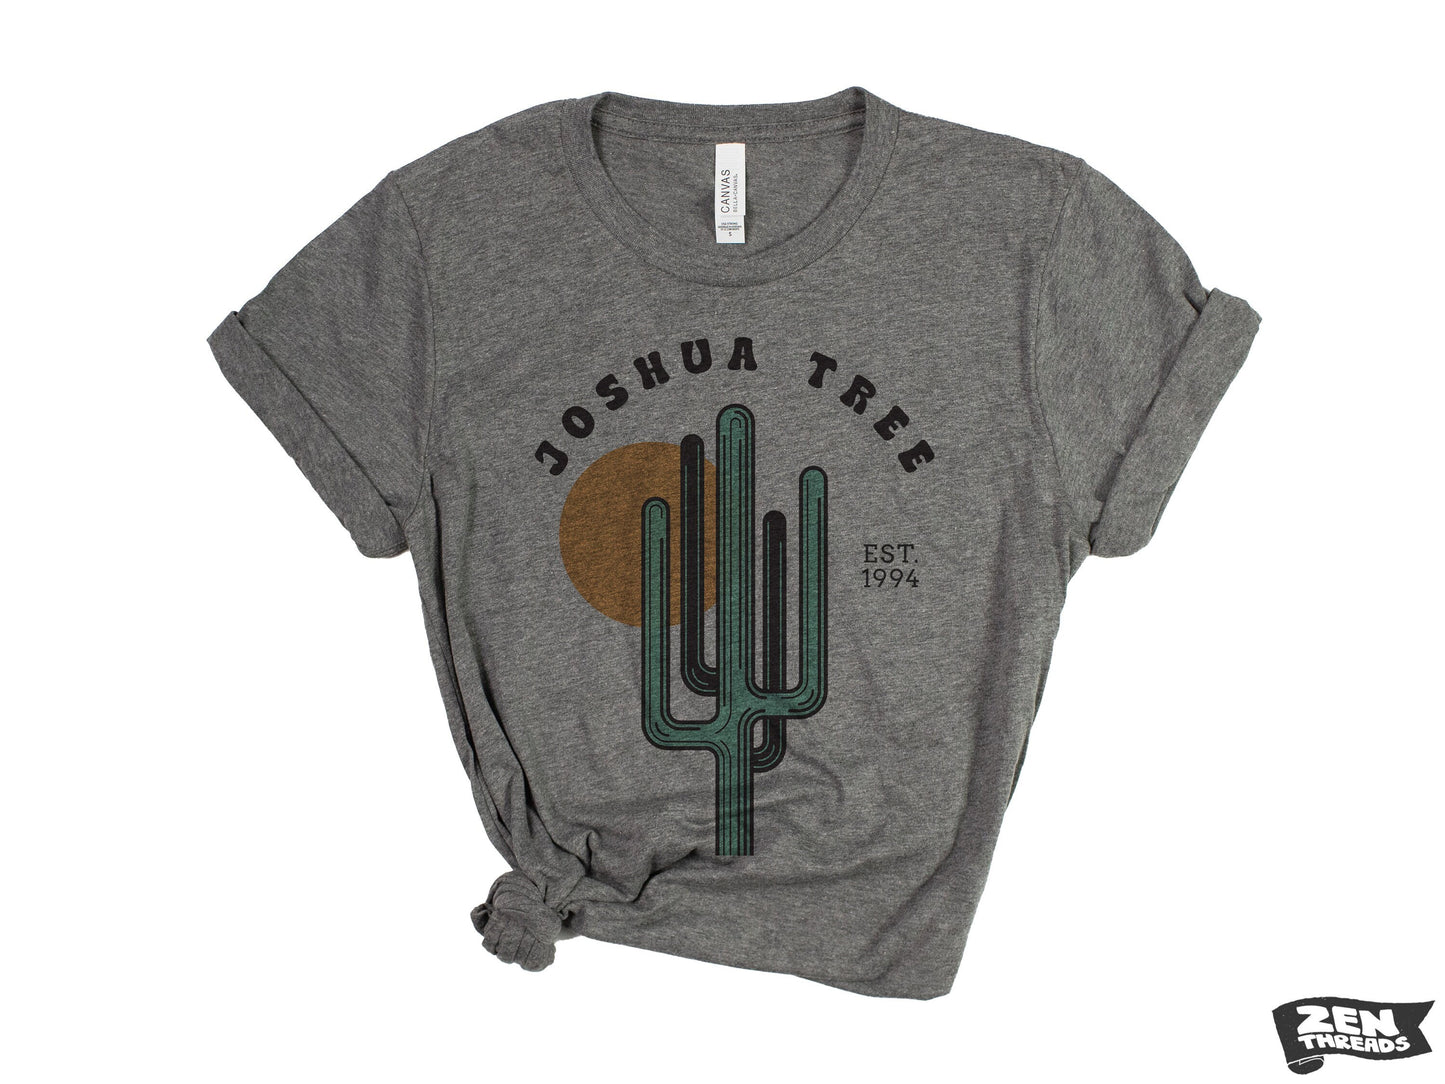 JOSHUA TREE Unisex mens women's Desert Cactus T Shirt National Park California custom color printed tee camping travel hiking